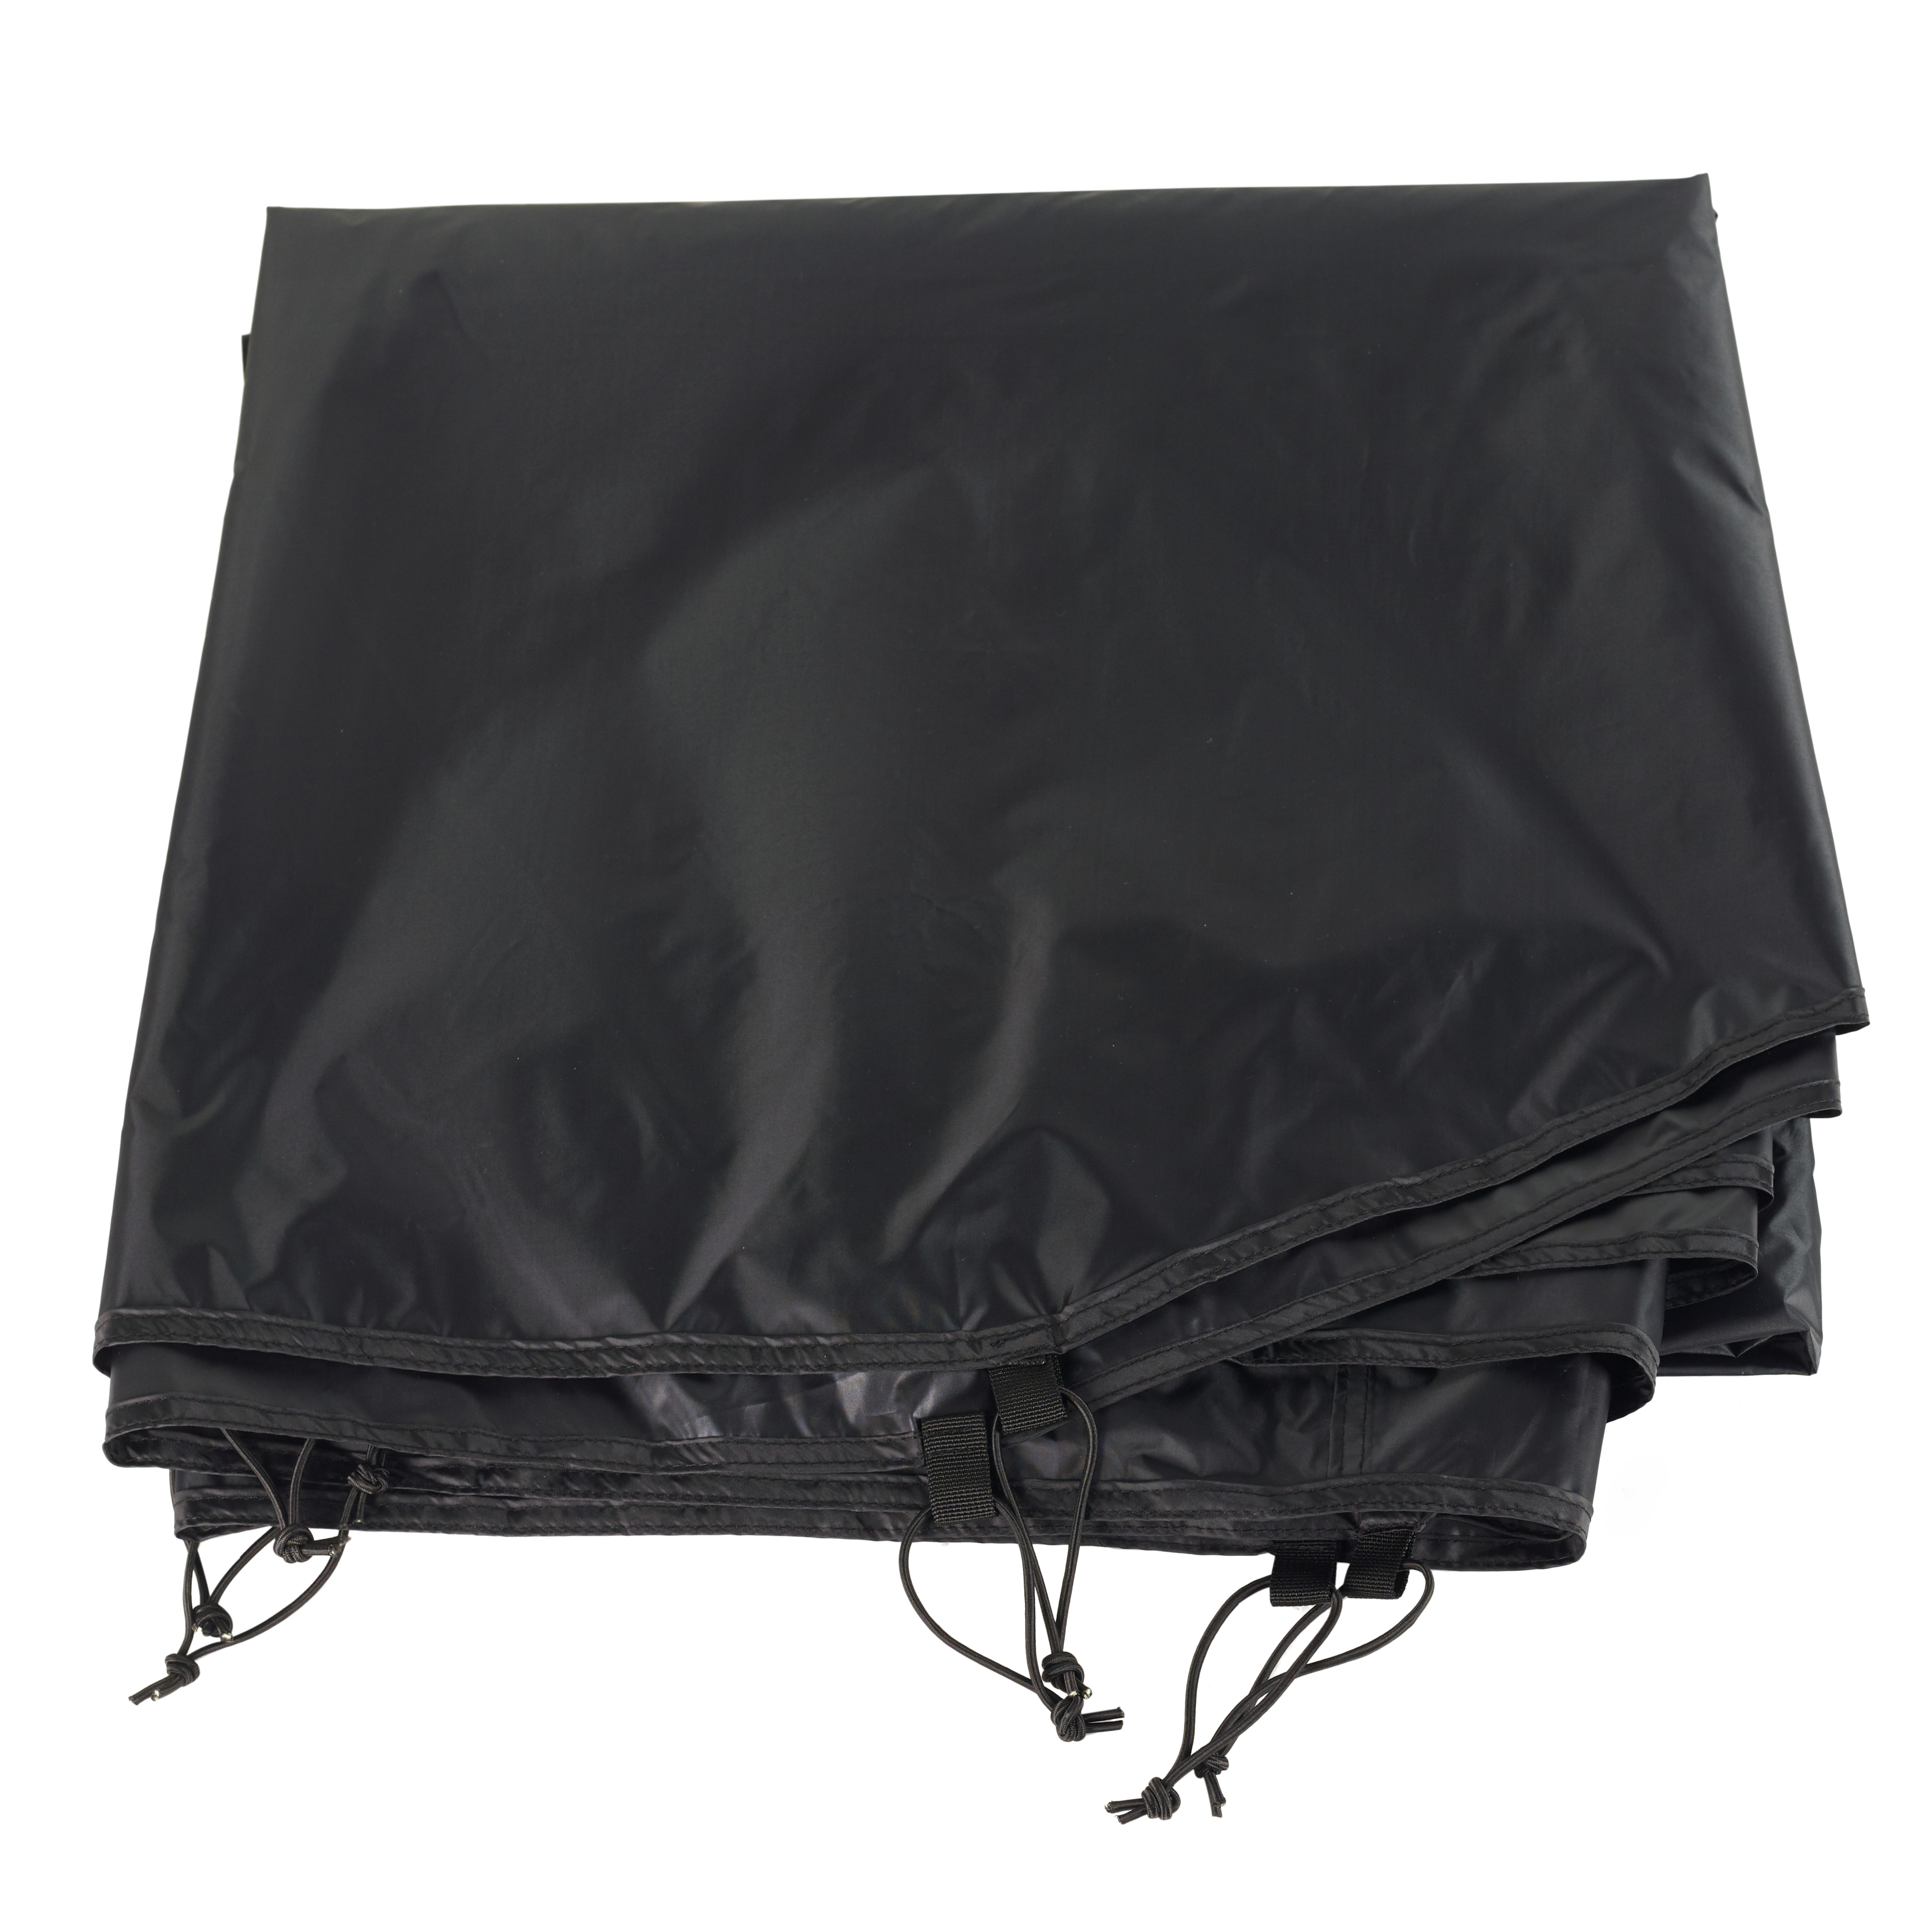 Urberg Urberg Footprint 2-Person Dome Tent G3 Black OneSize, Black